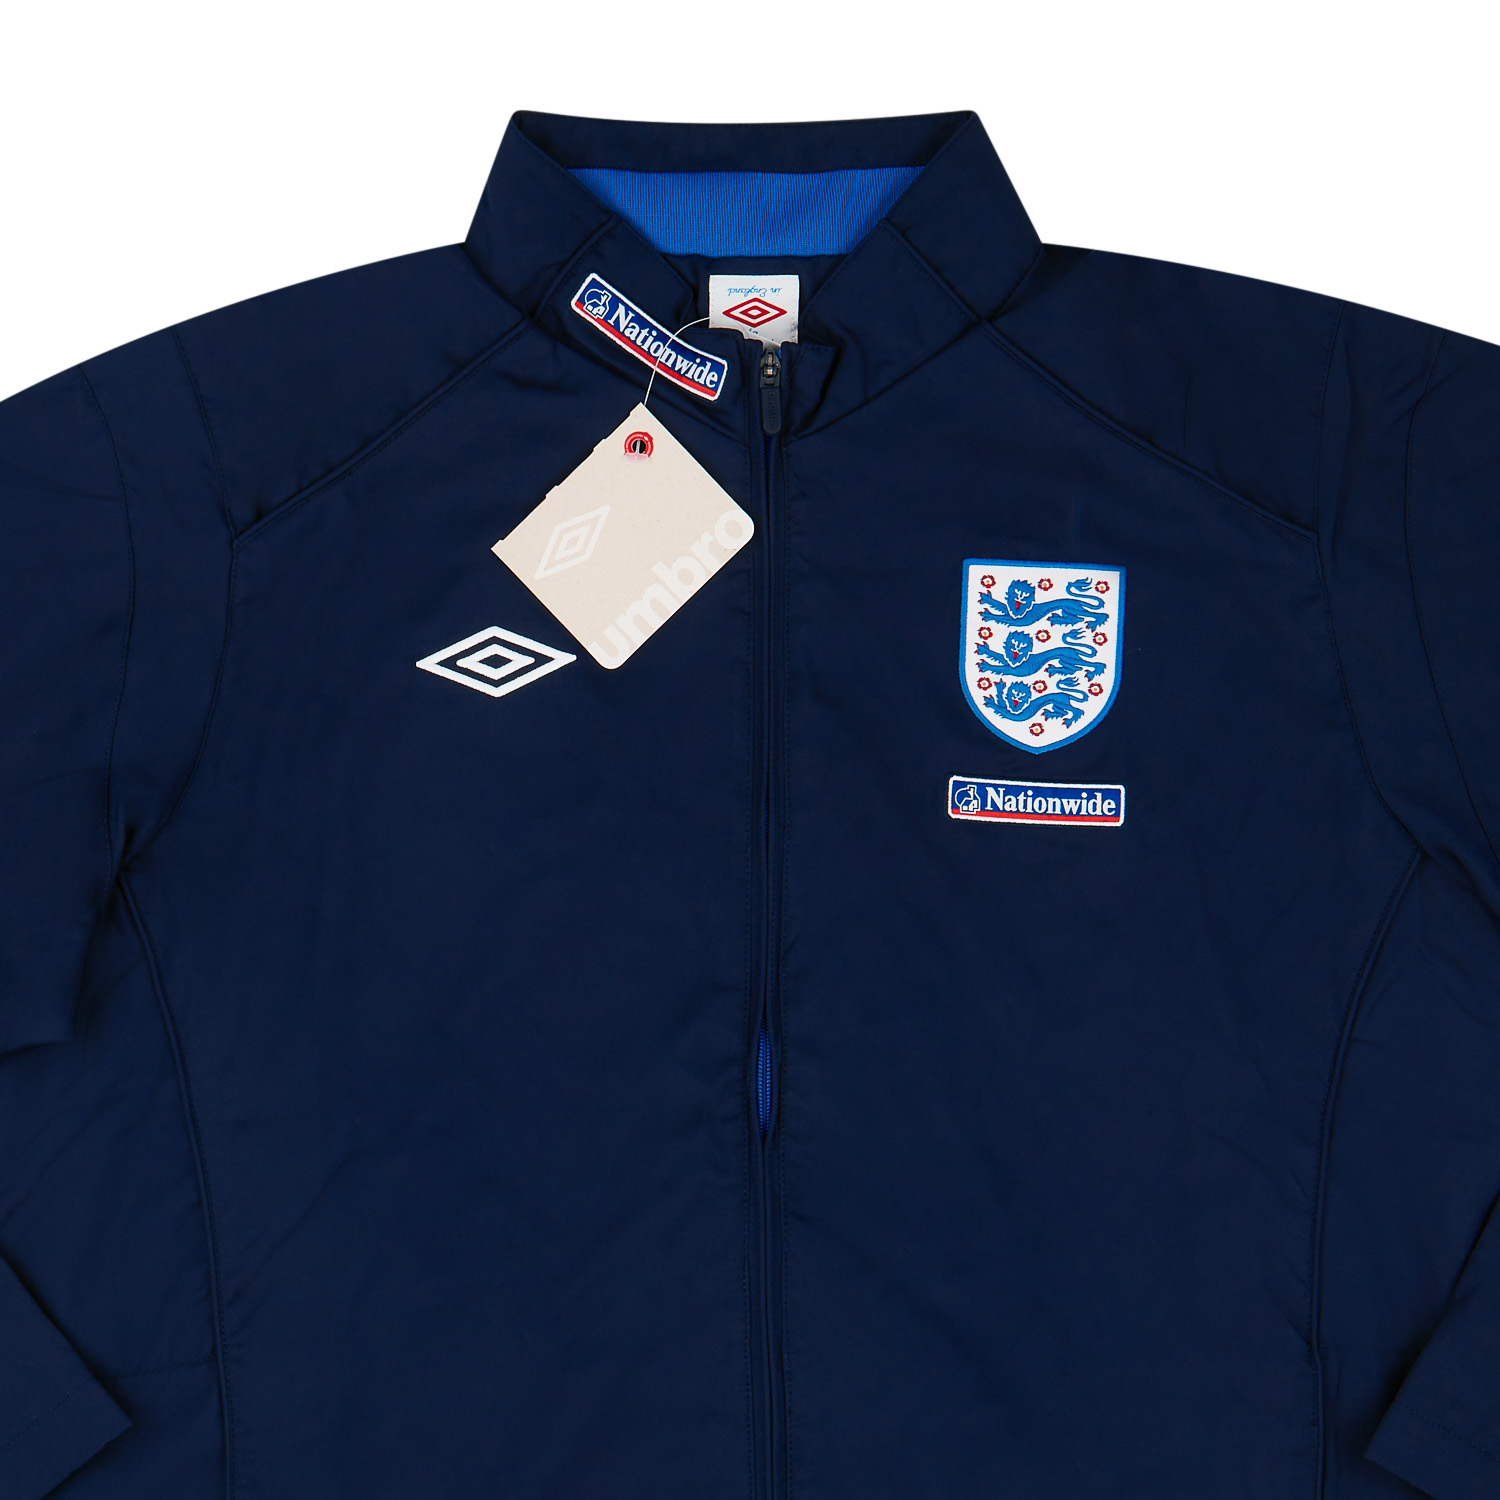 2008-09 England Umbro Track Jacket - NEW - XXL